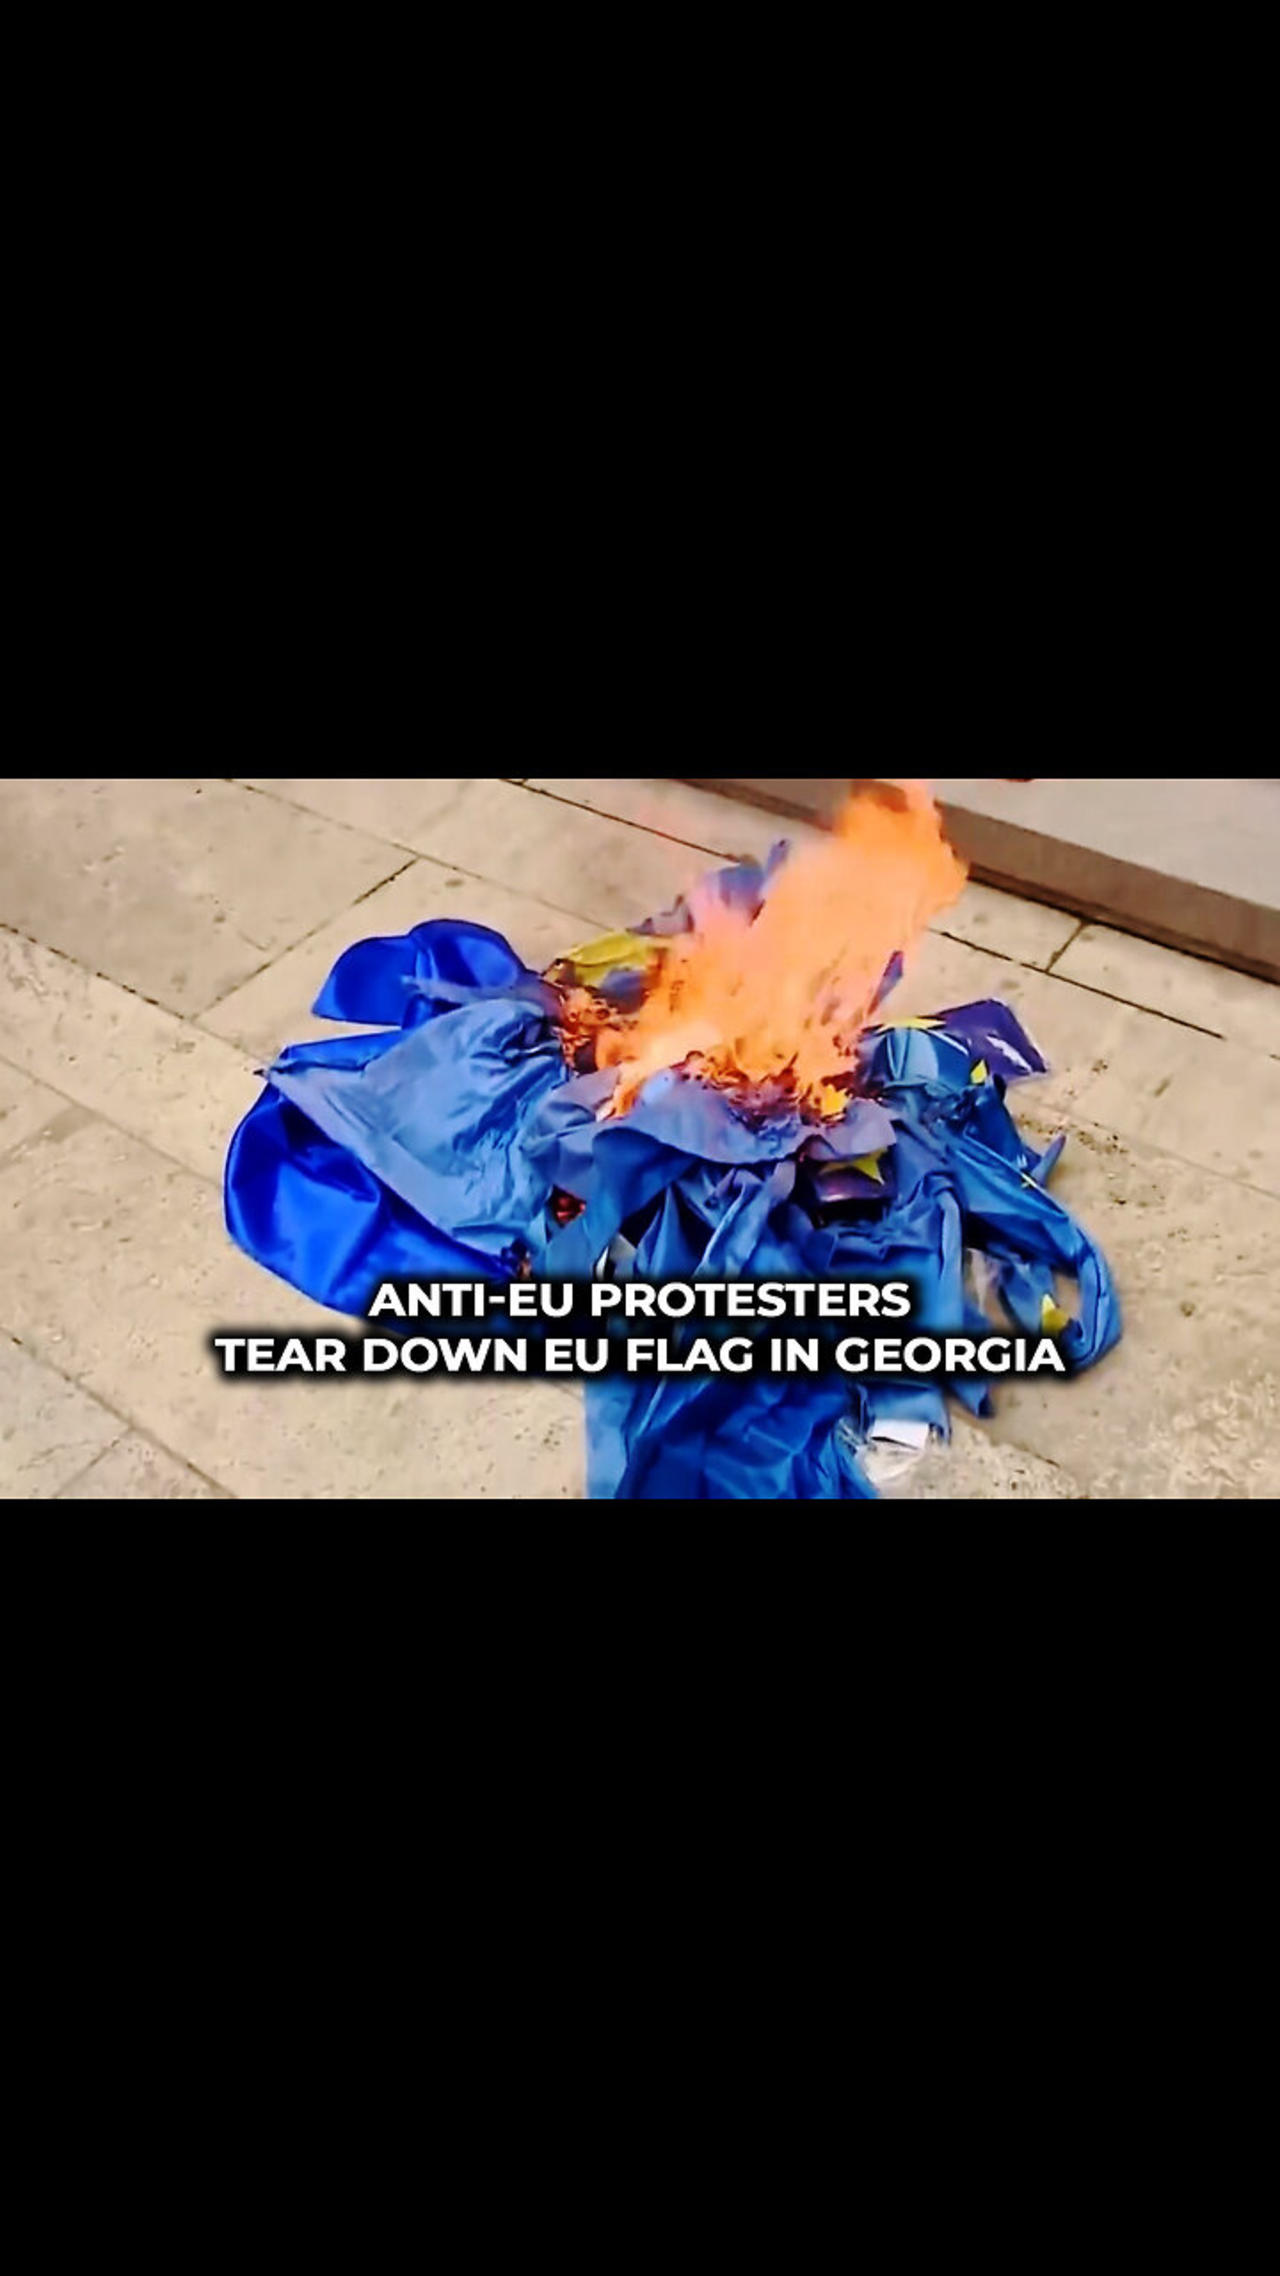 Anti-EU protesters tear down EU flag in Georgia